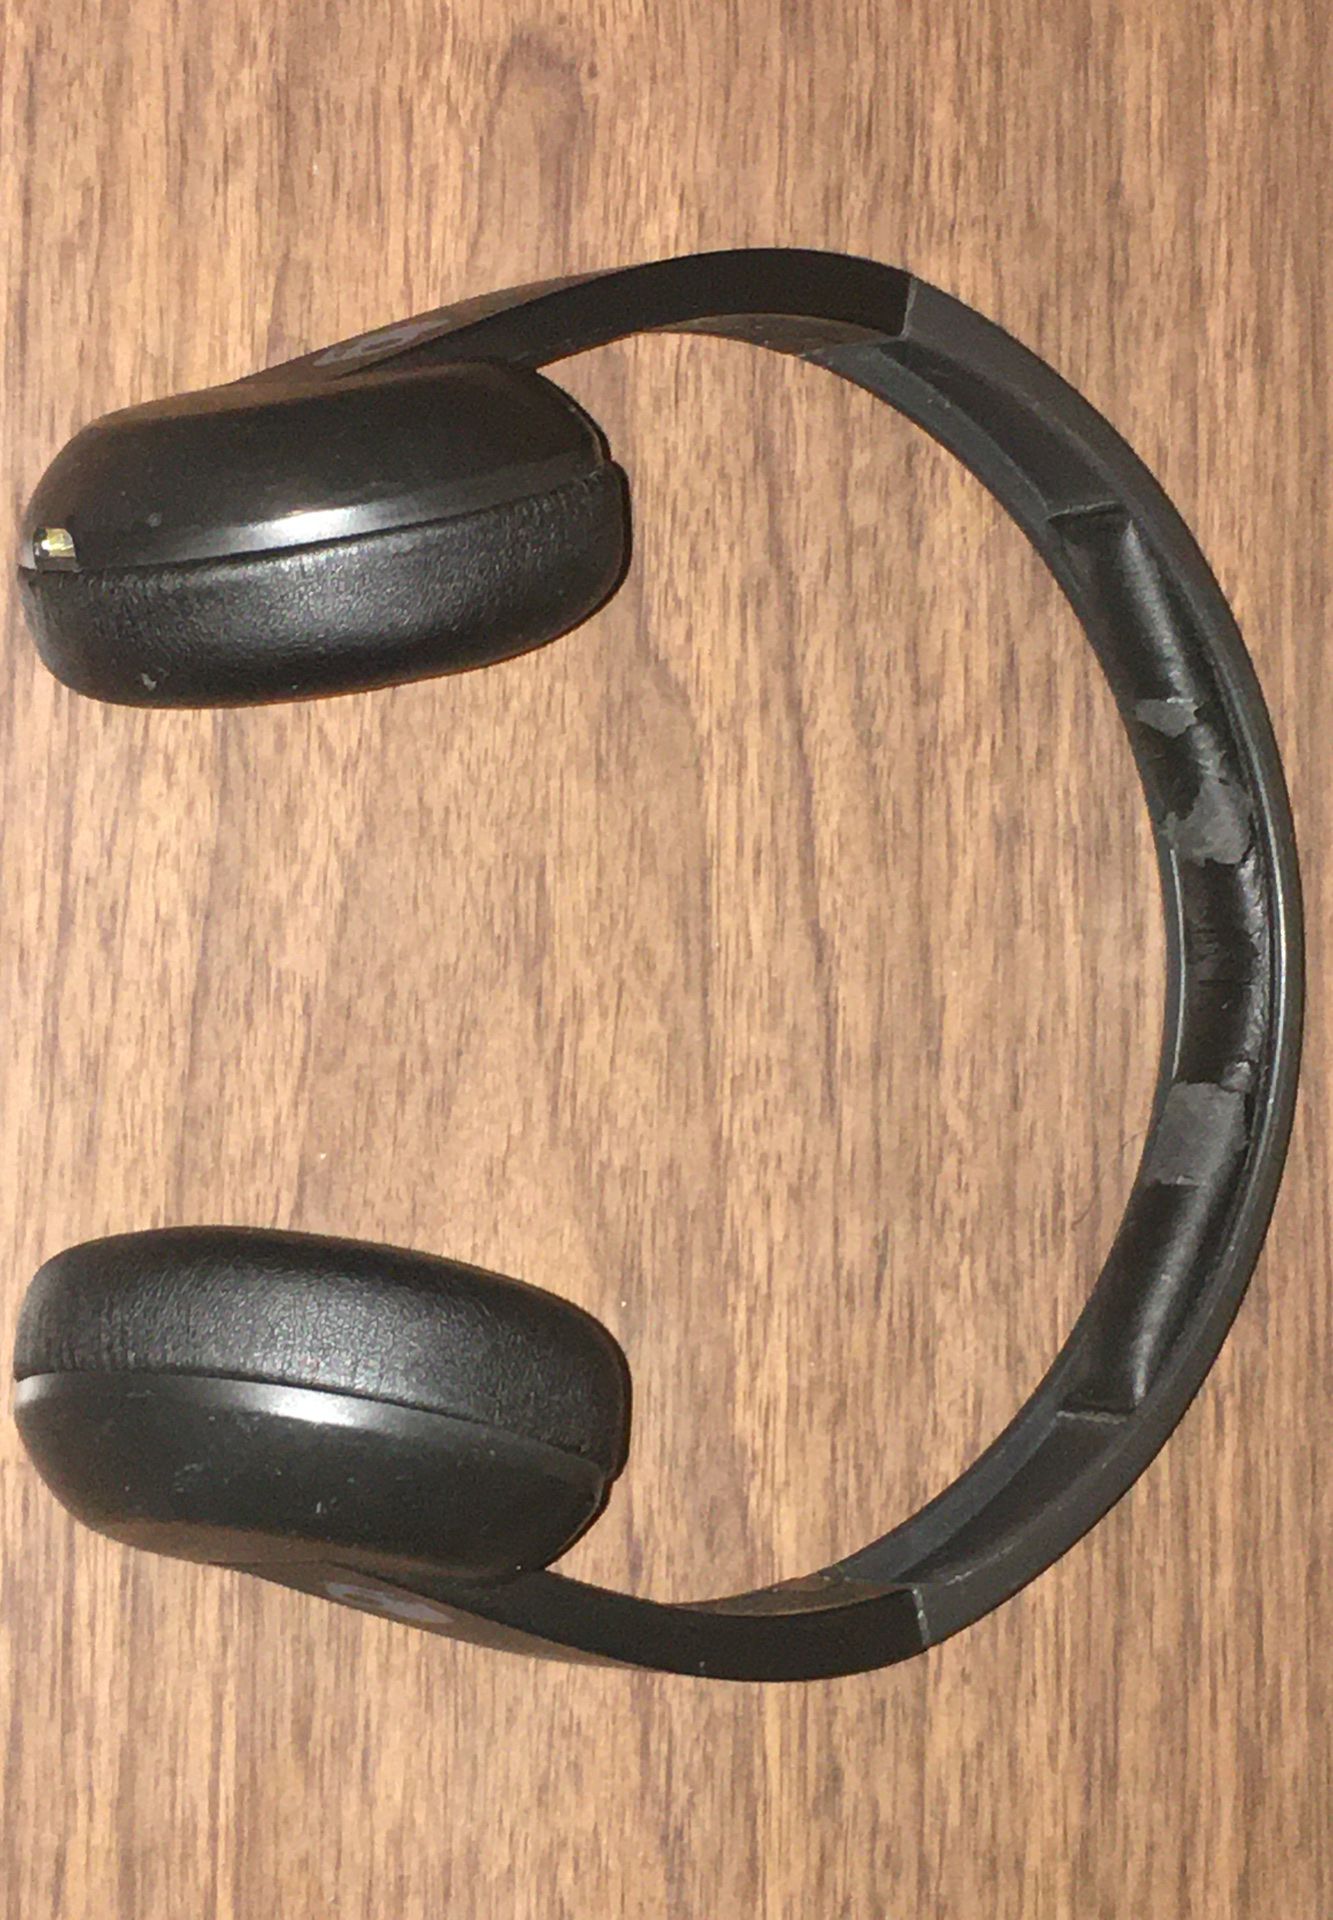 Skullcandy Uproar Bluetooth wireless headphones